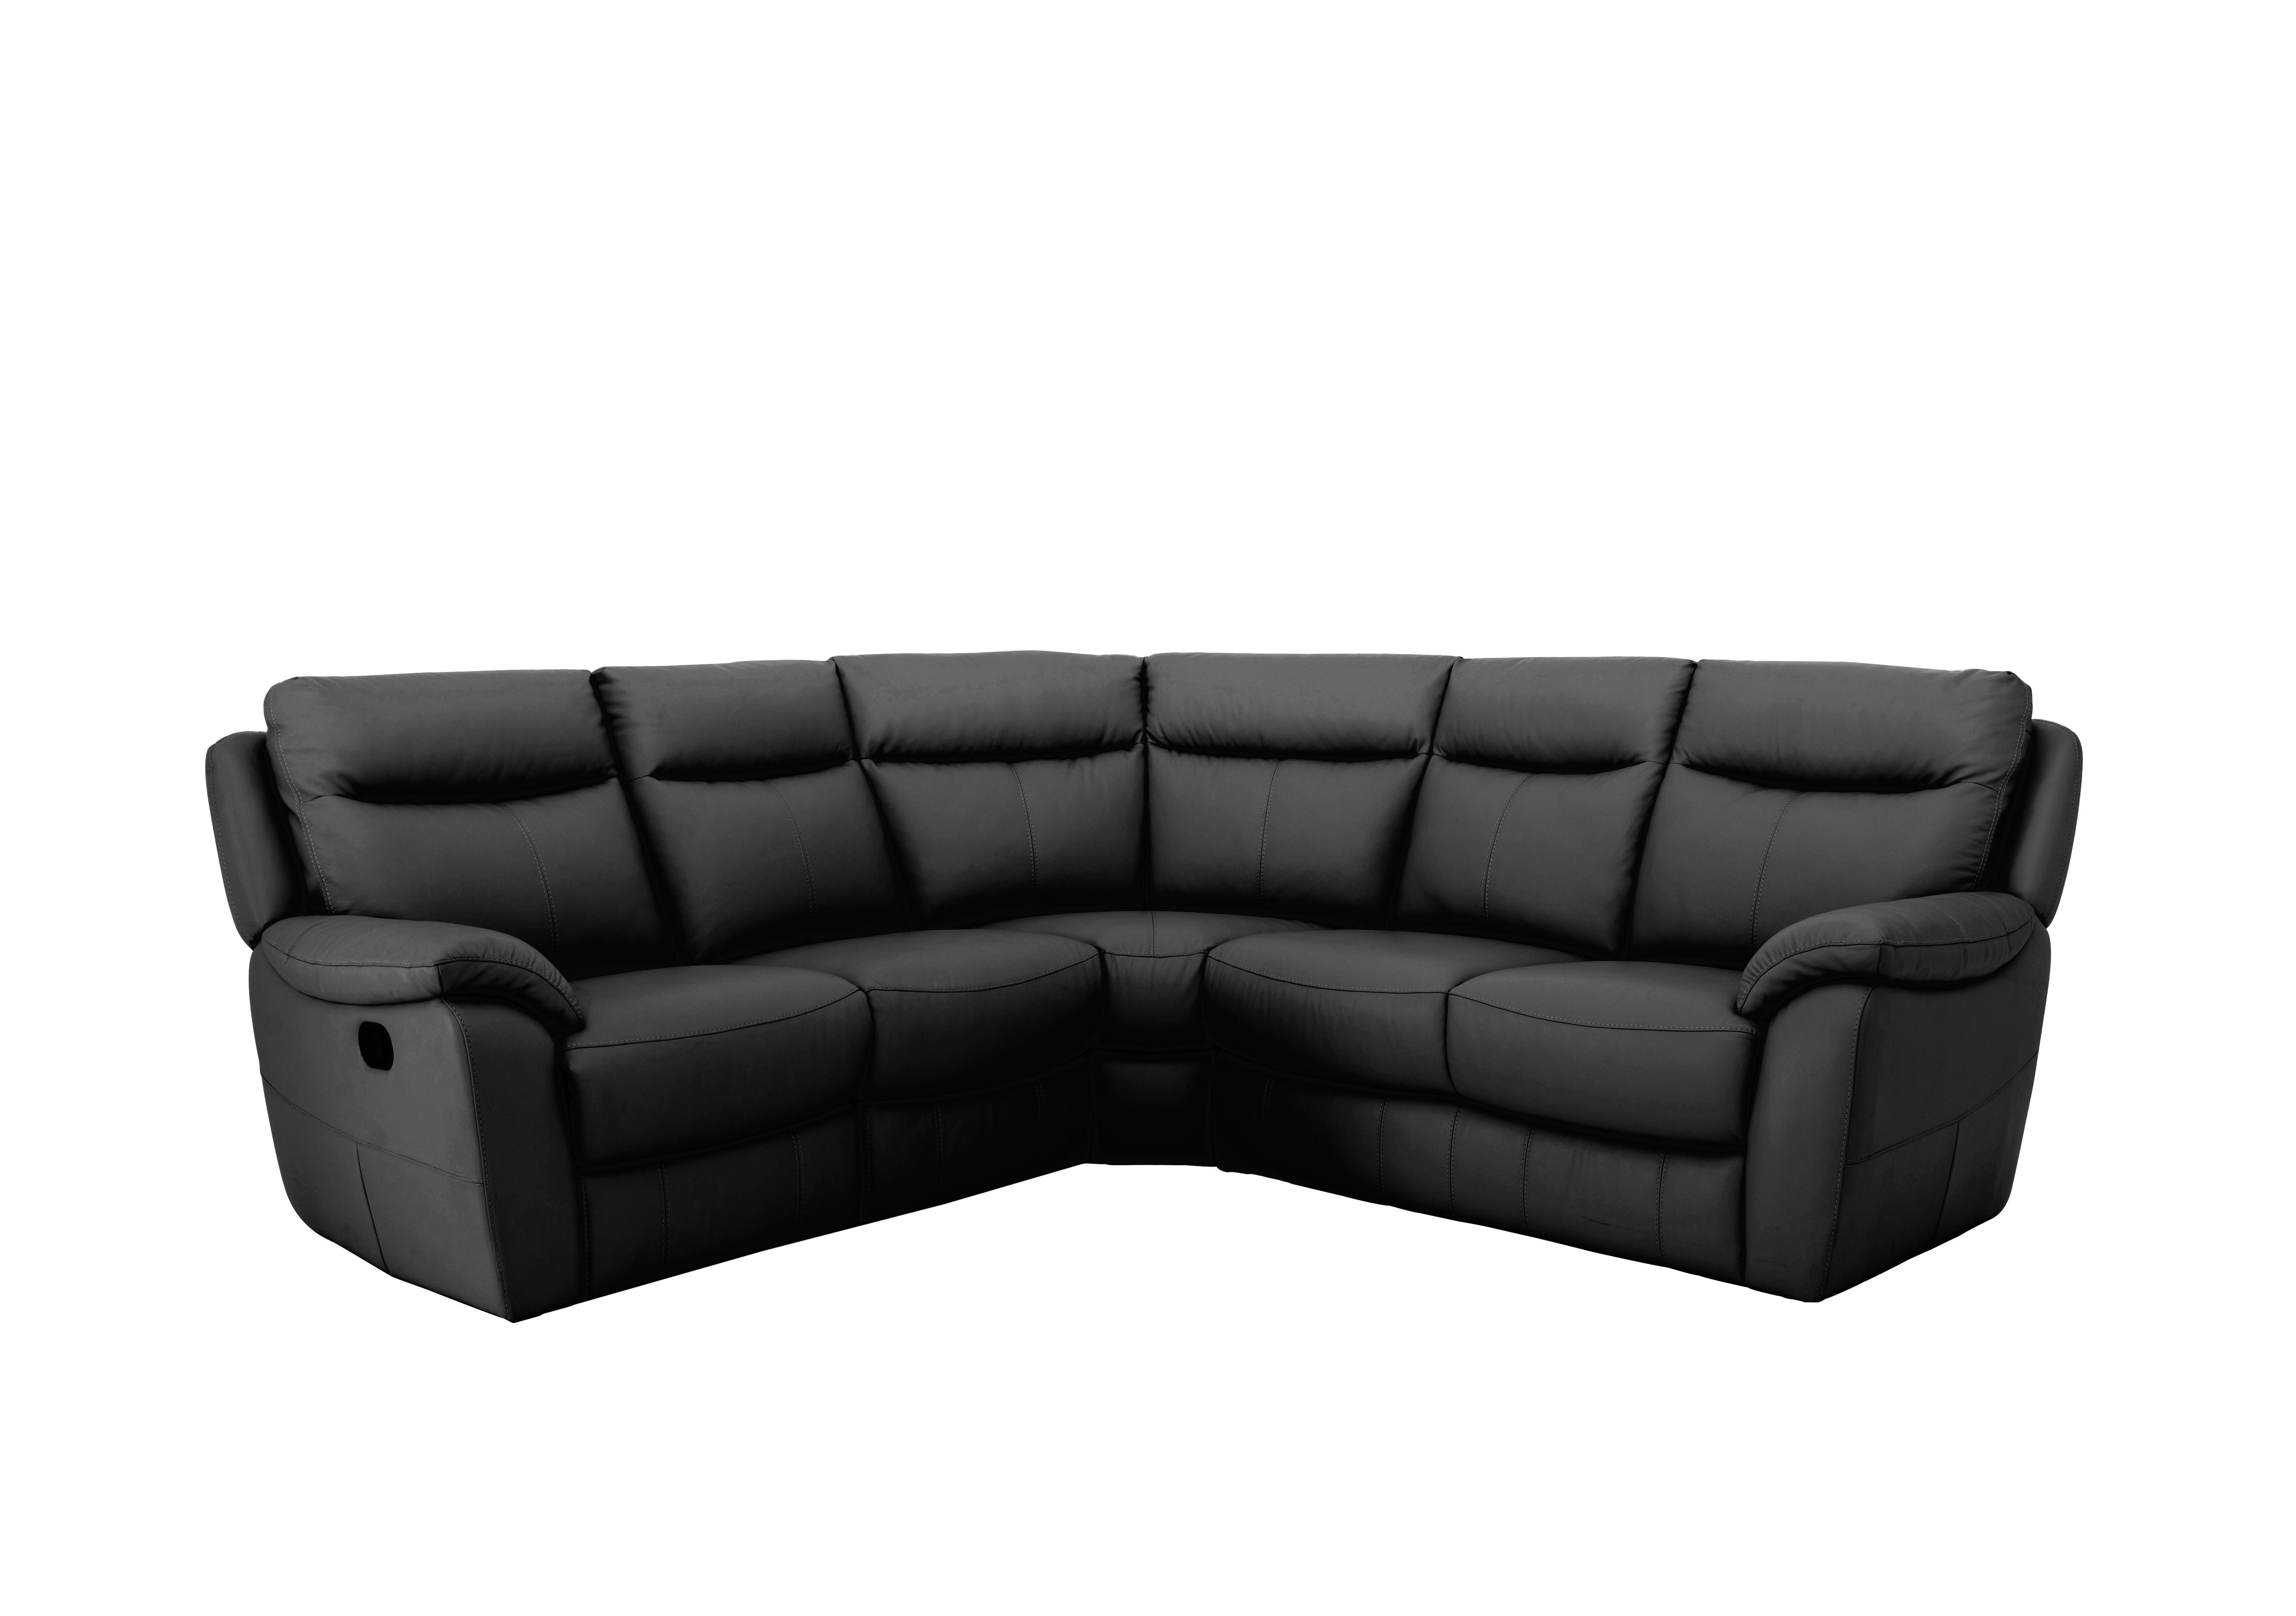 Snug Leather Corner Sofa in Bv-3500 Classic Black on Furniture Village